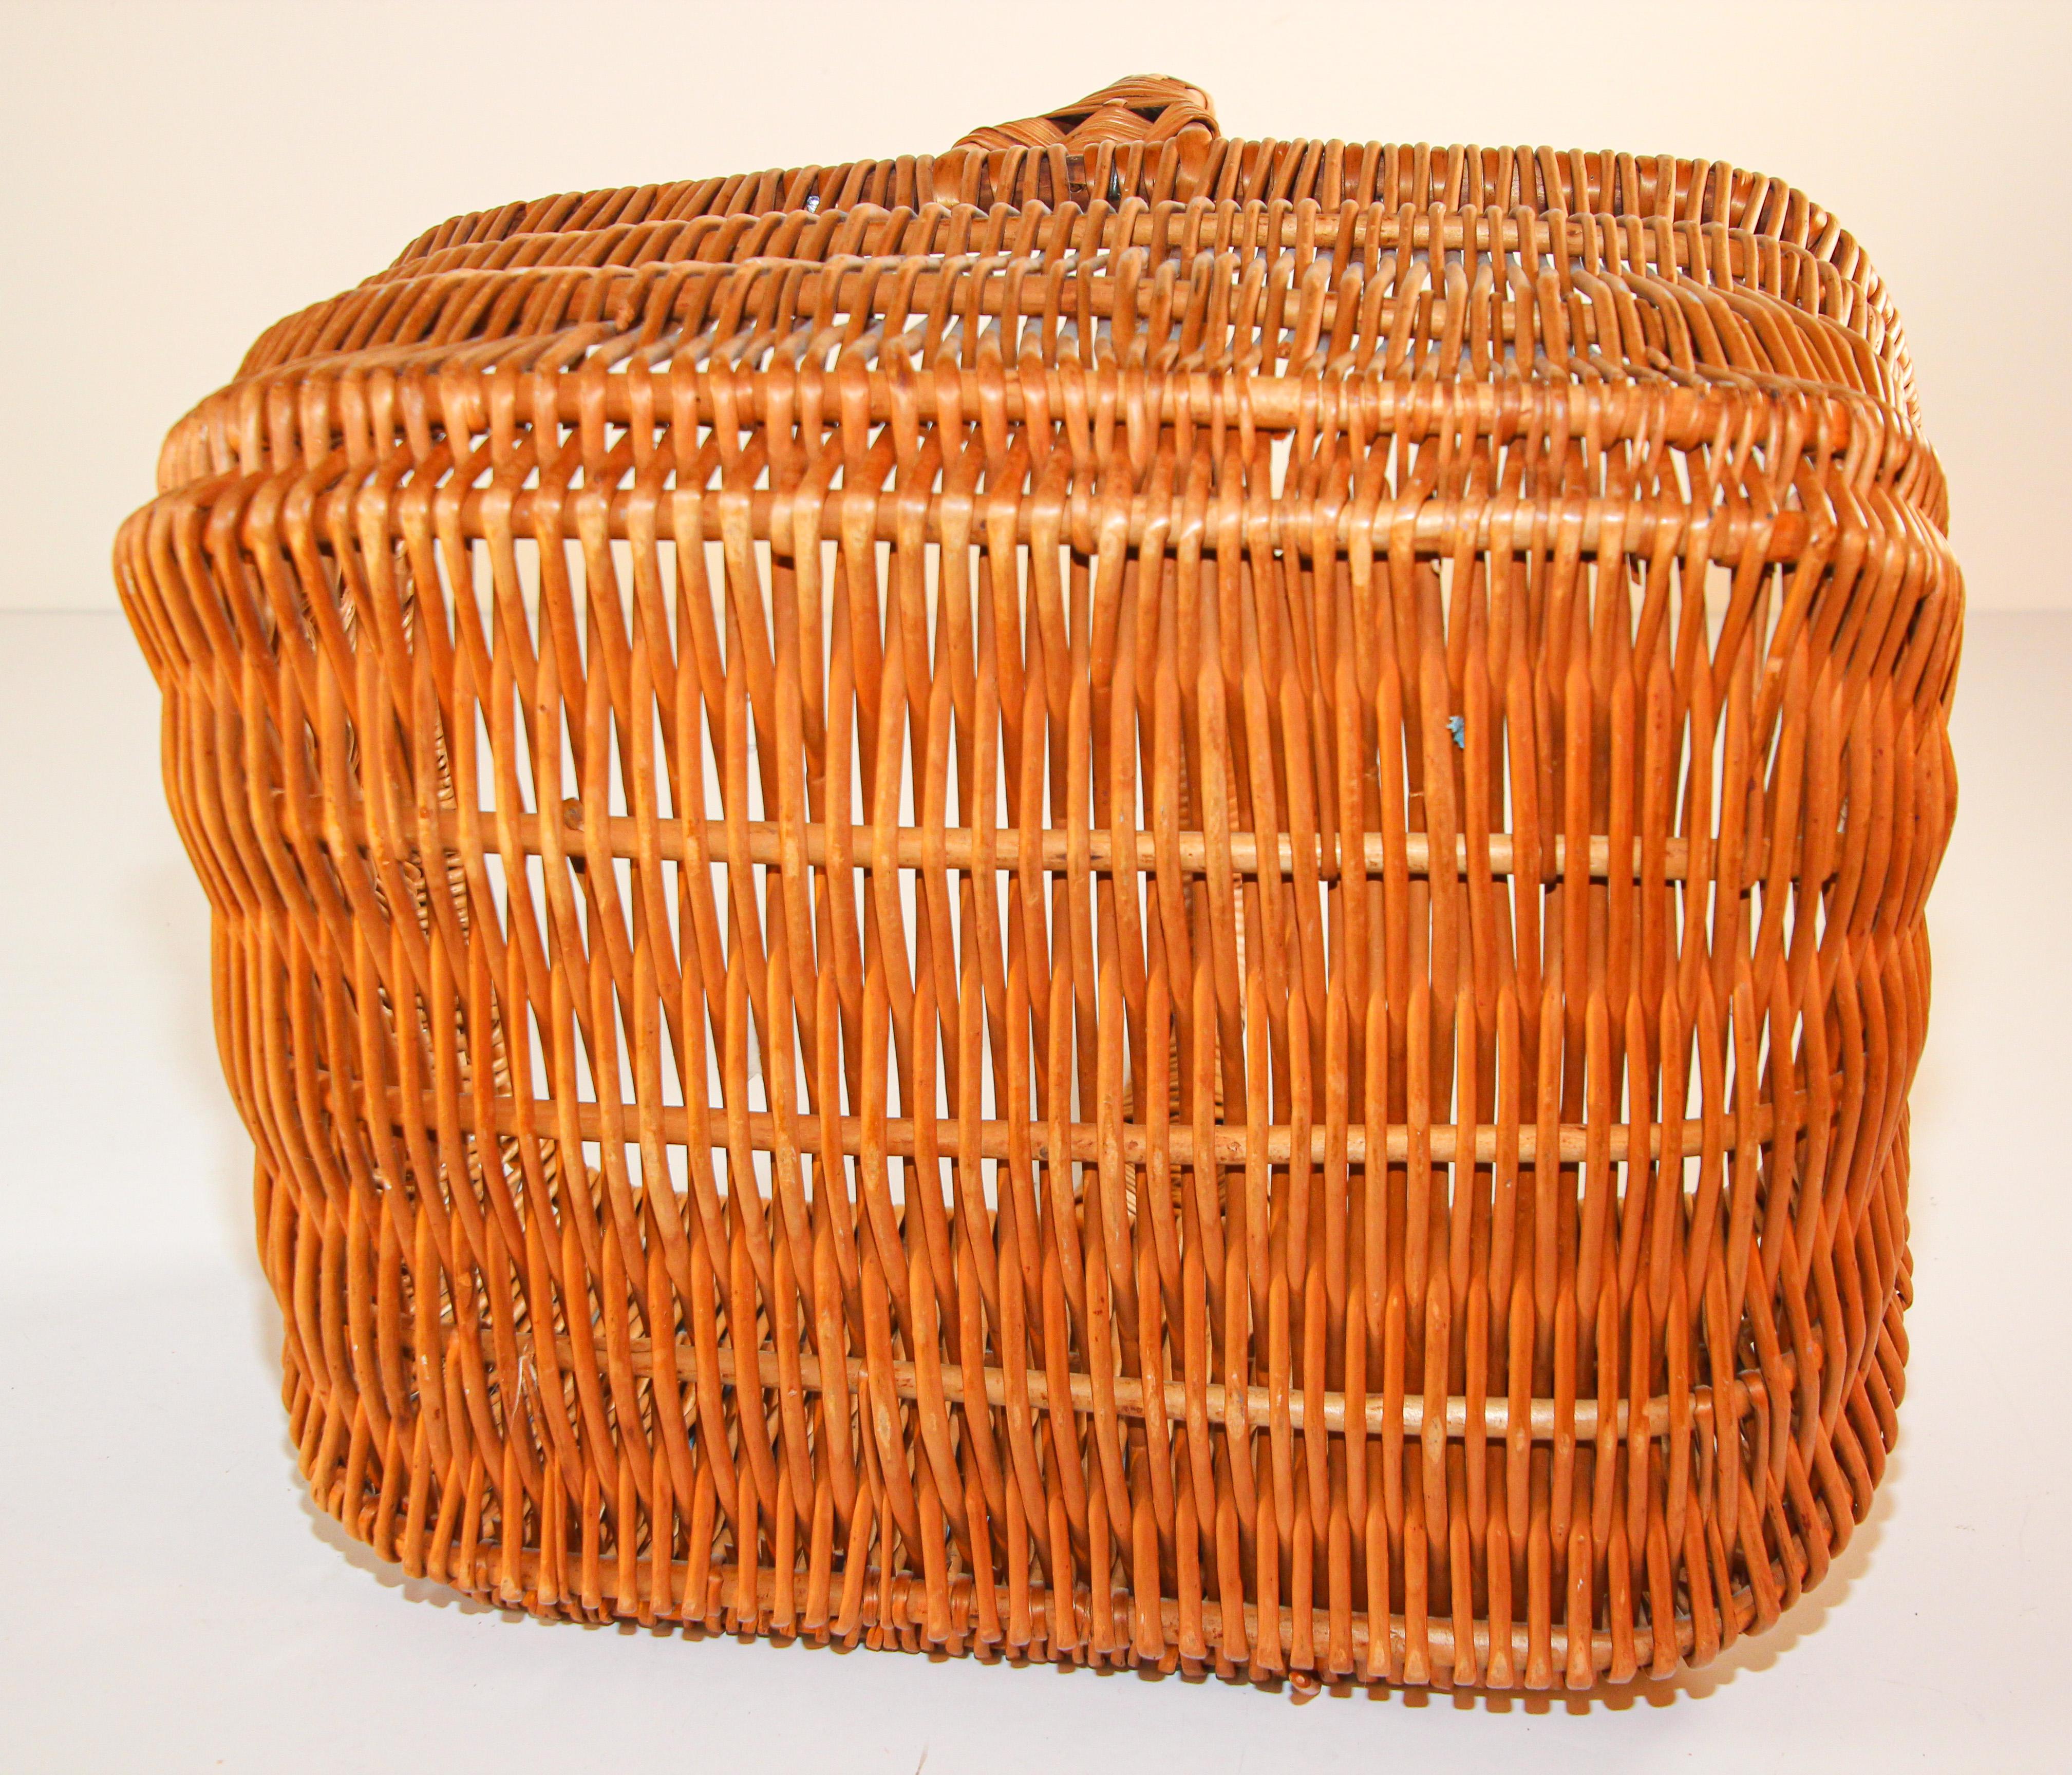 Rotin Panier provincial français vintage en rotin avec poignée en forme de sac, 1950 en vente